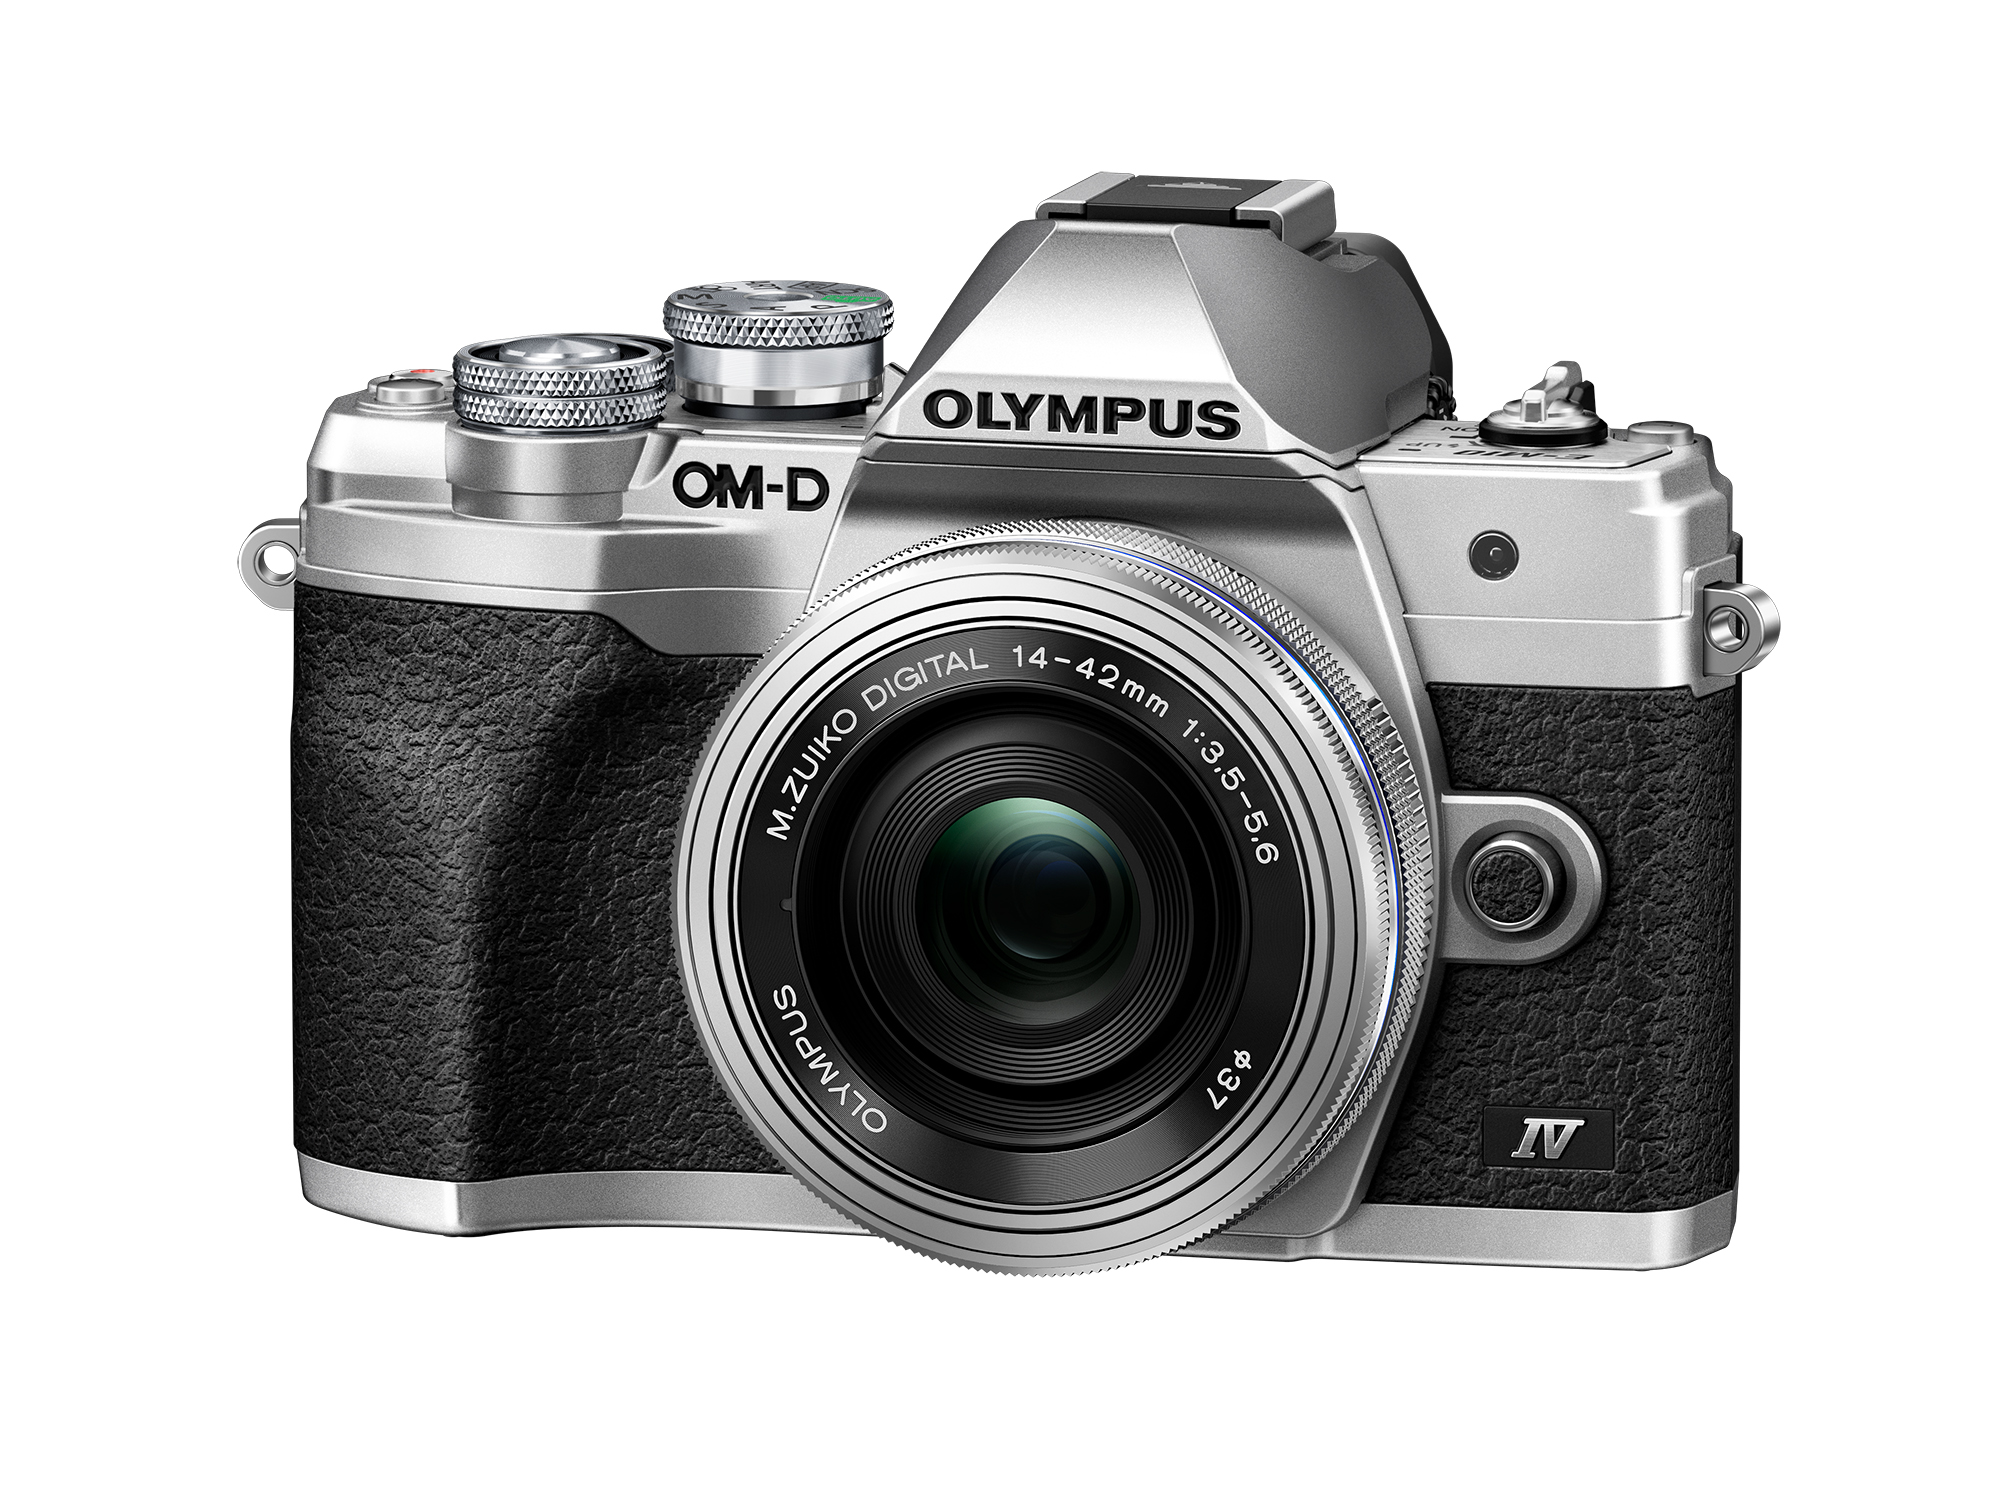 Olympus OM-D E-M10 Mark IV Camera with ED 14-42mm F3.5-5.6 EZ Lens, Silver  V207132SU000